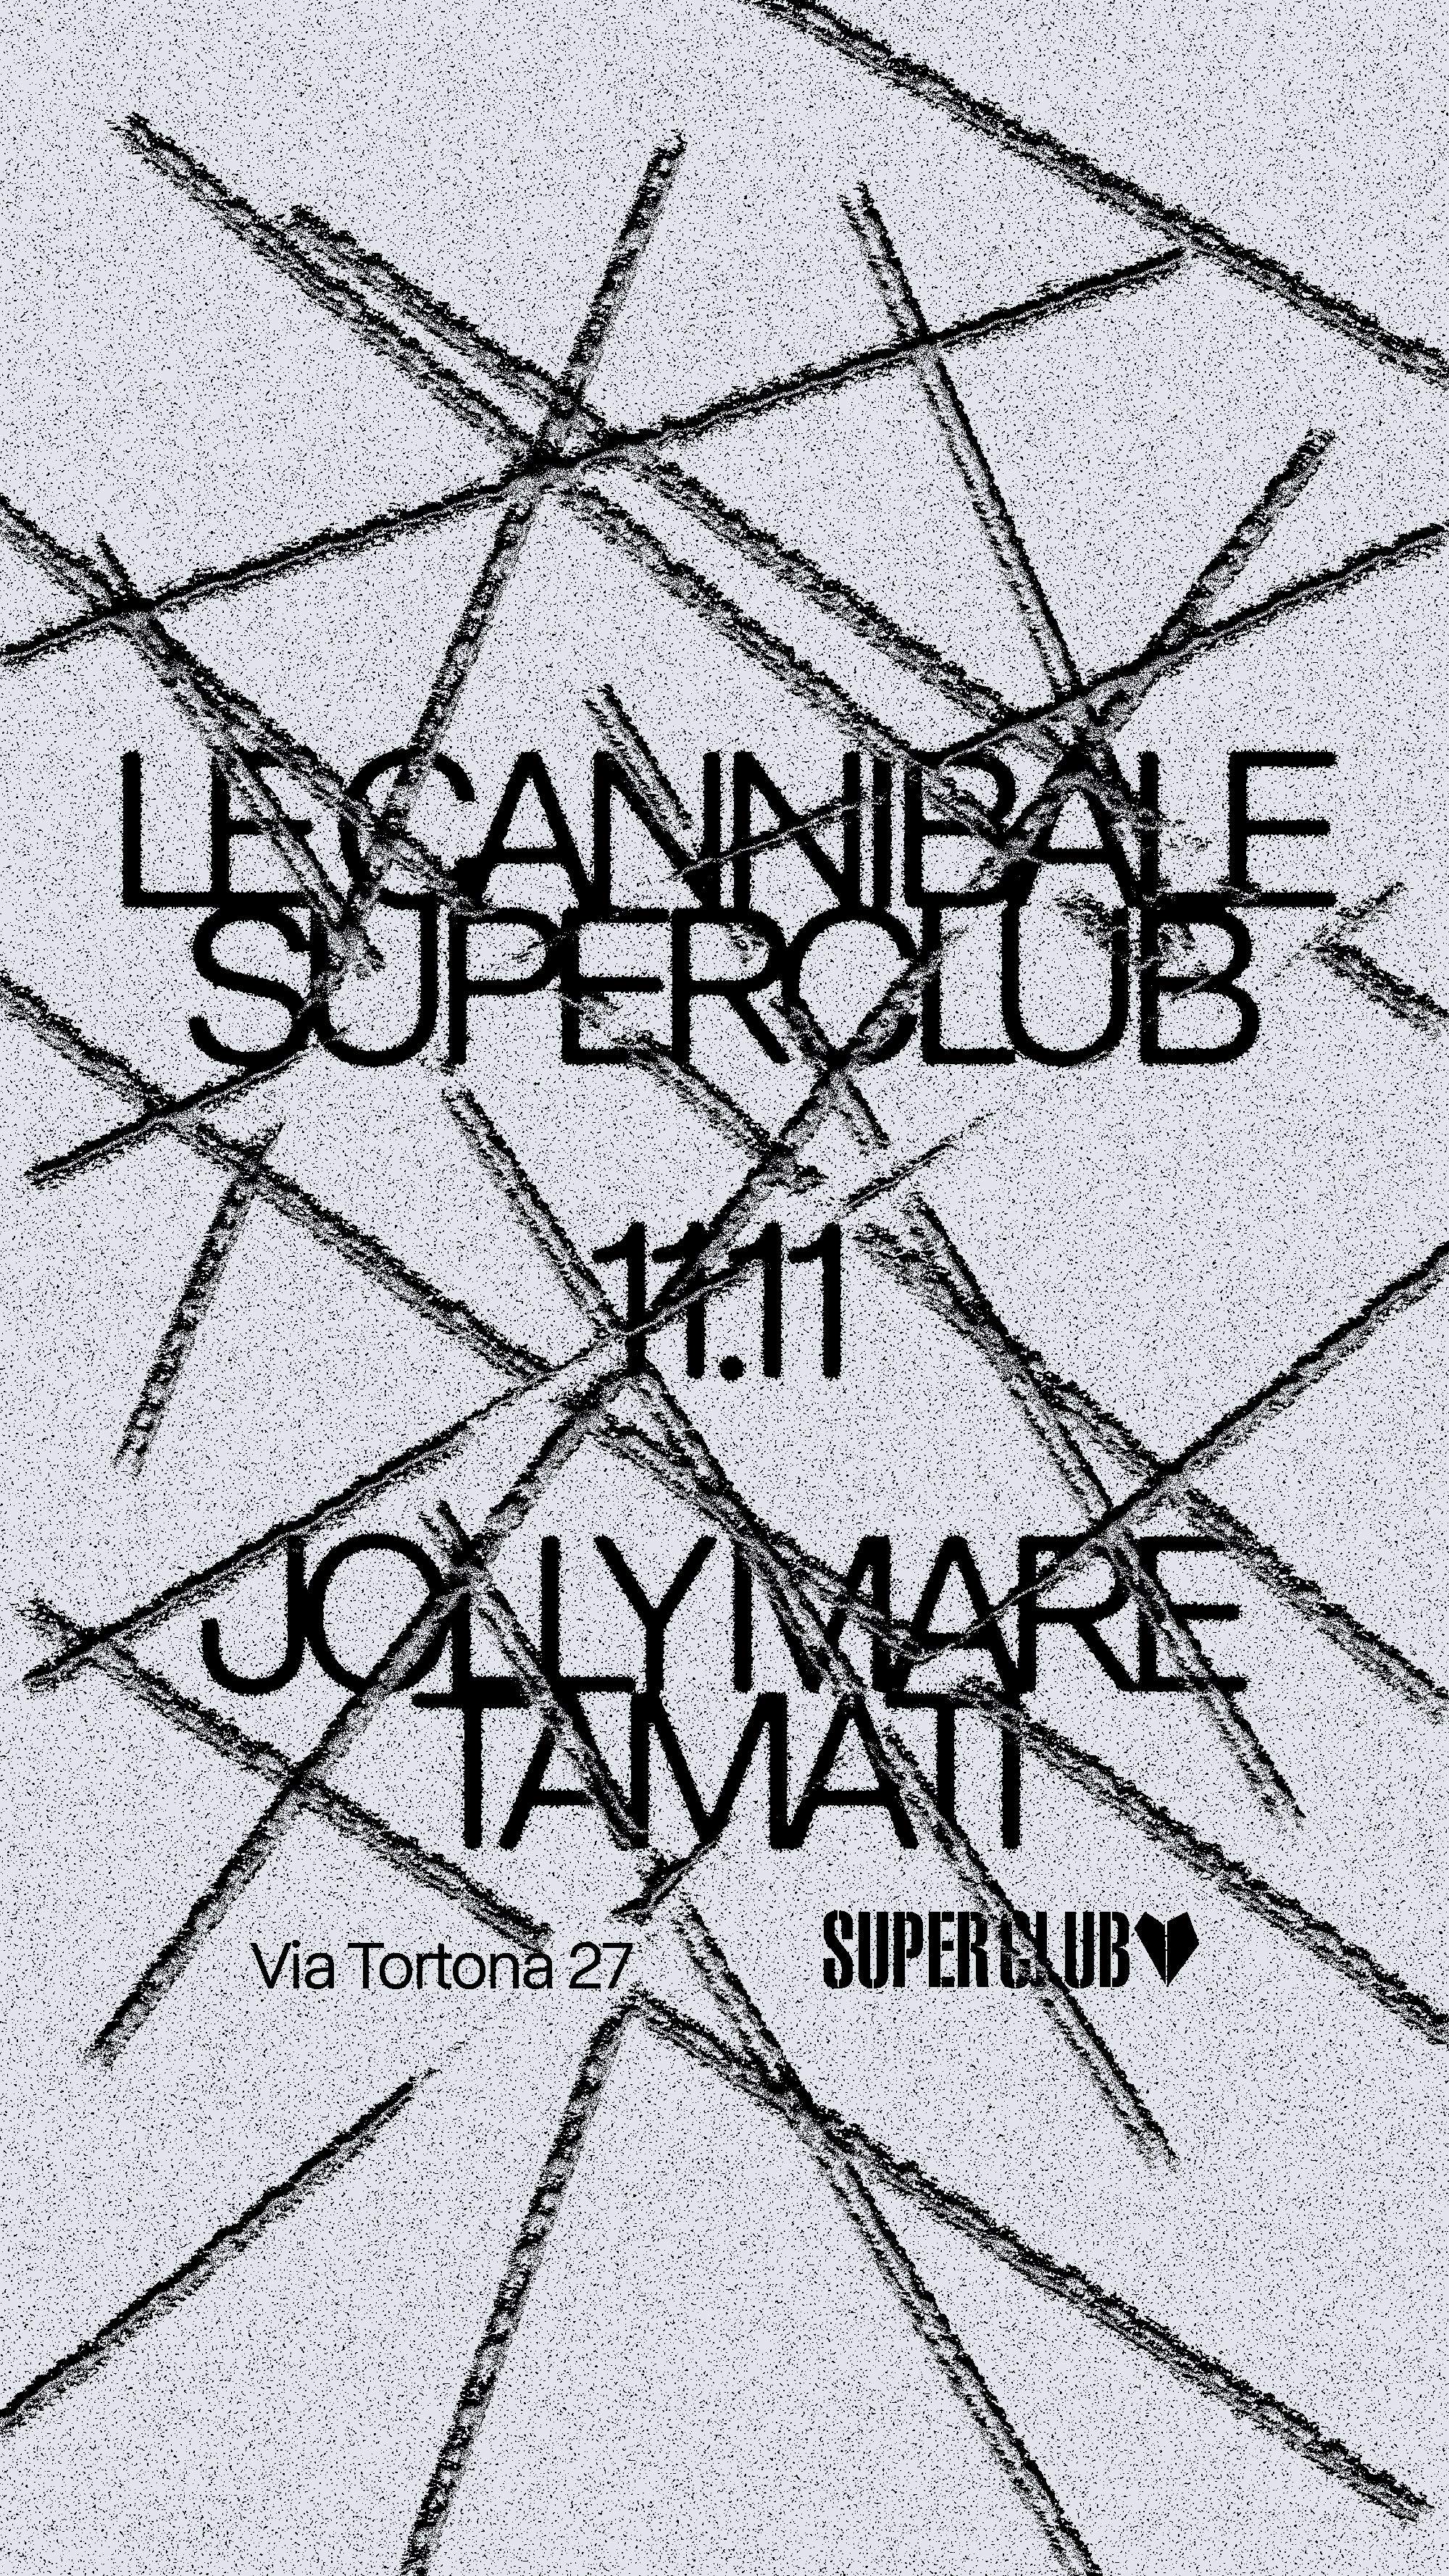 Le Cannibale Superclub - Jolly Mare, Tamati - フライヤー裏